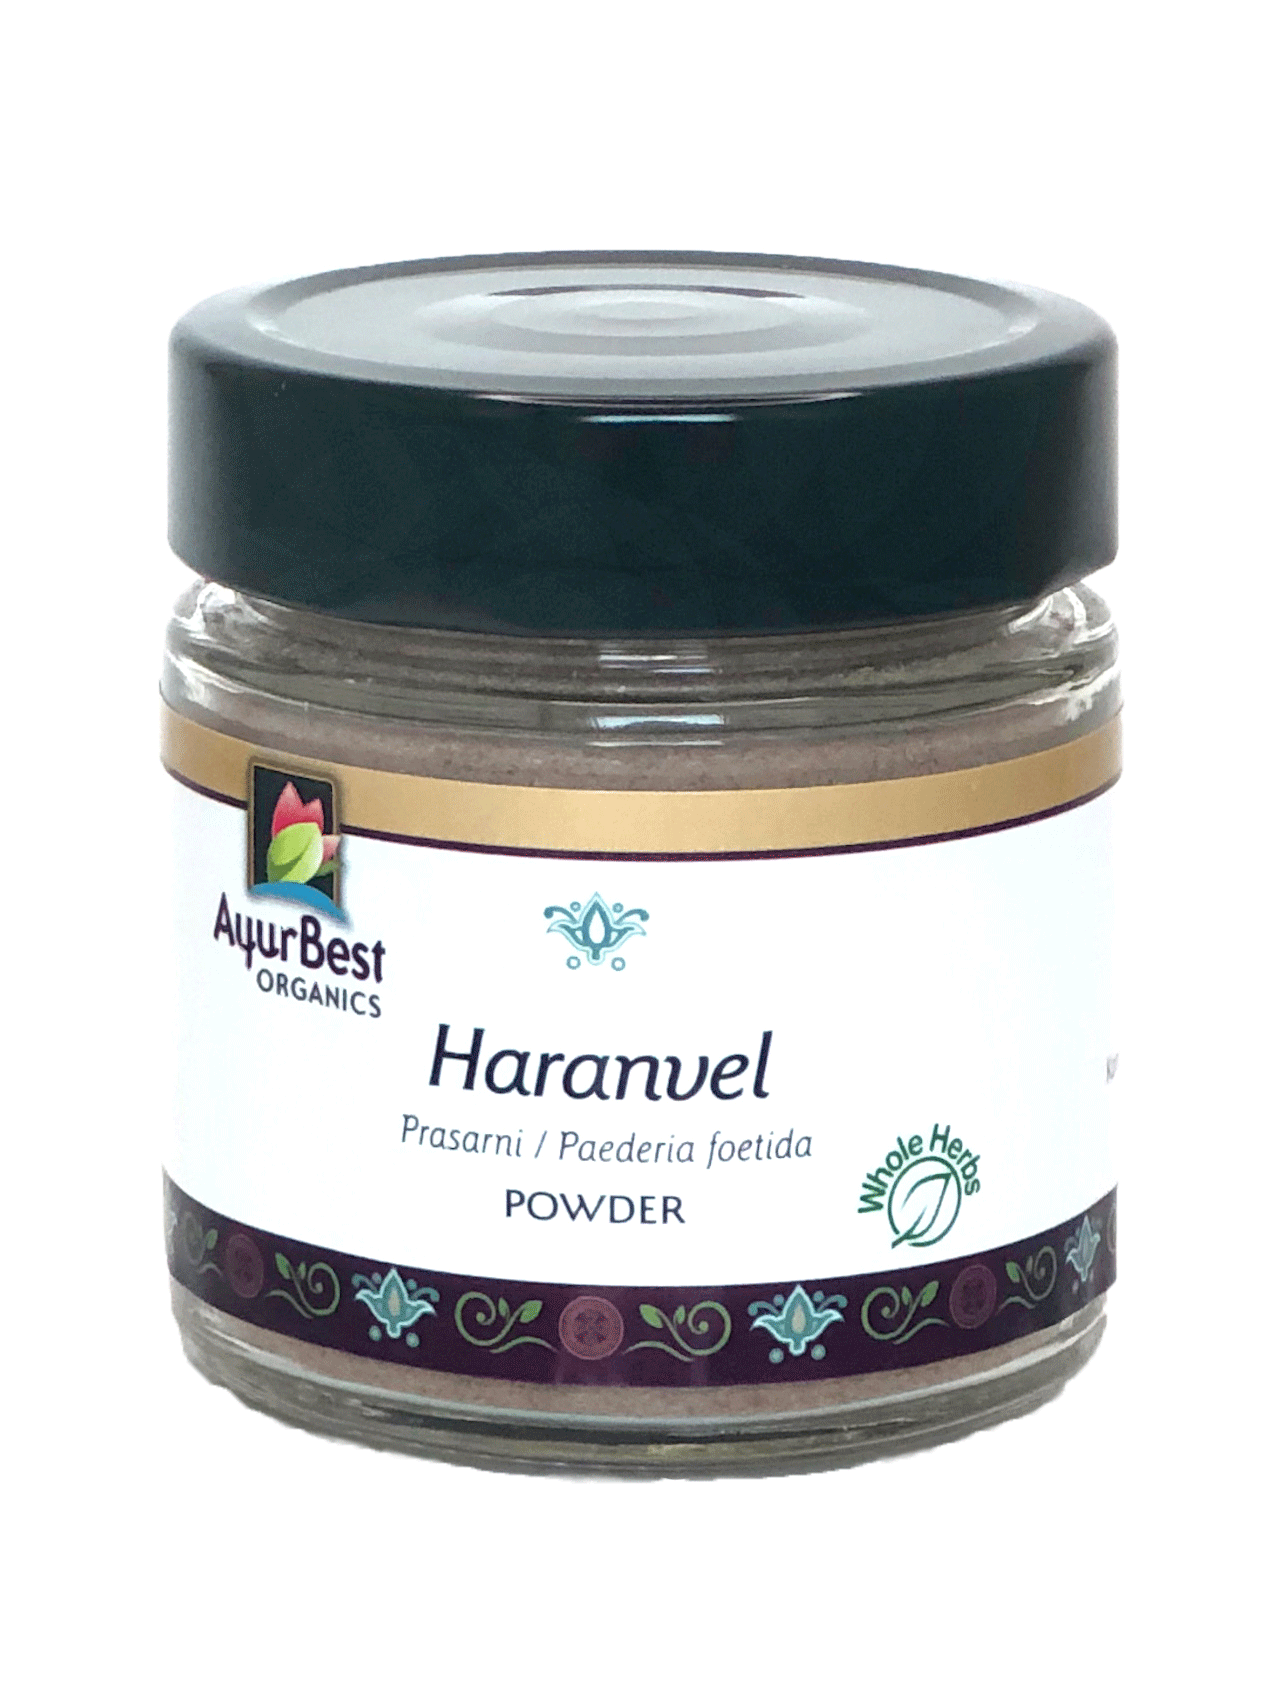 Organic Haranvel Powder available in 3.5oz jar!